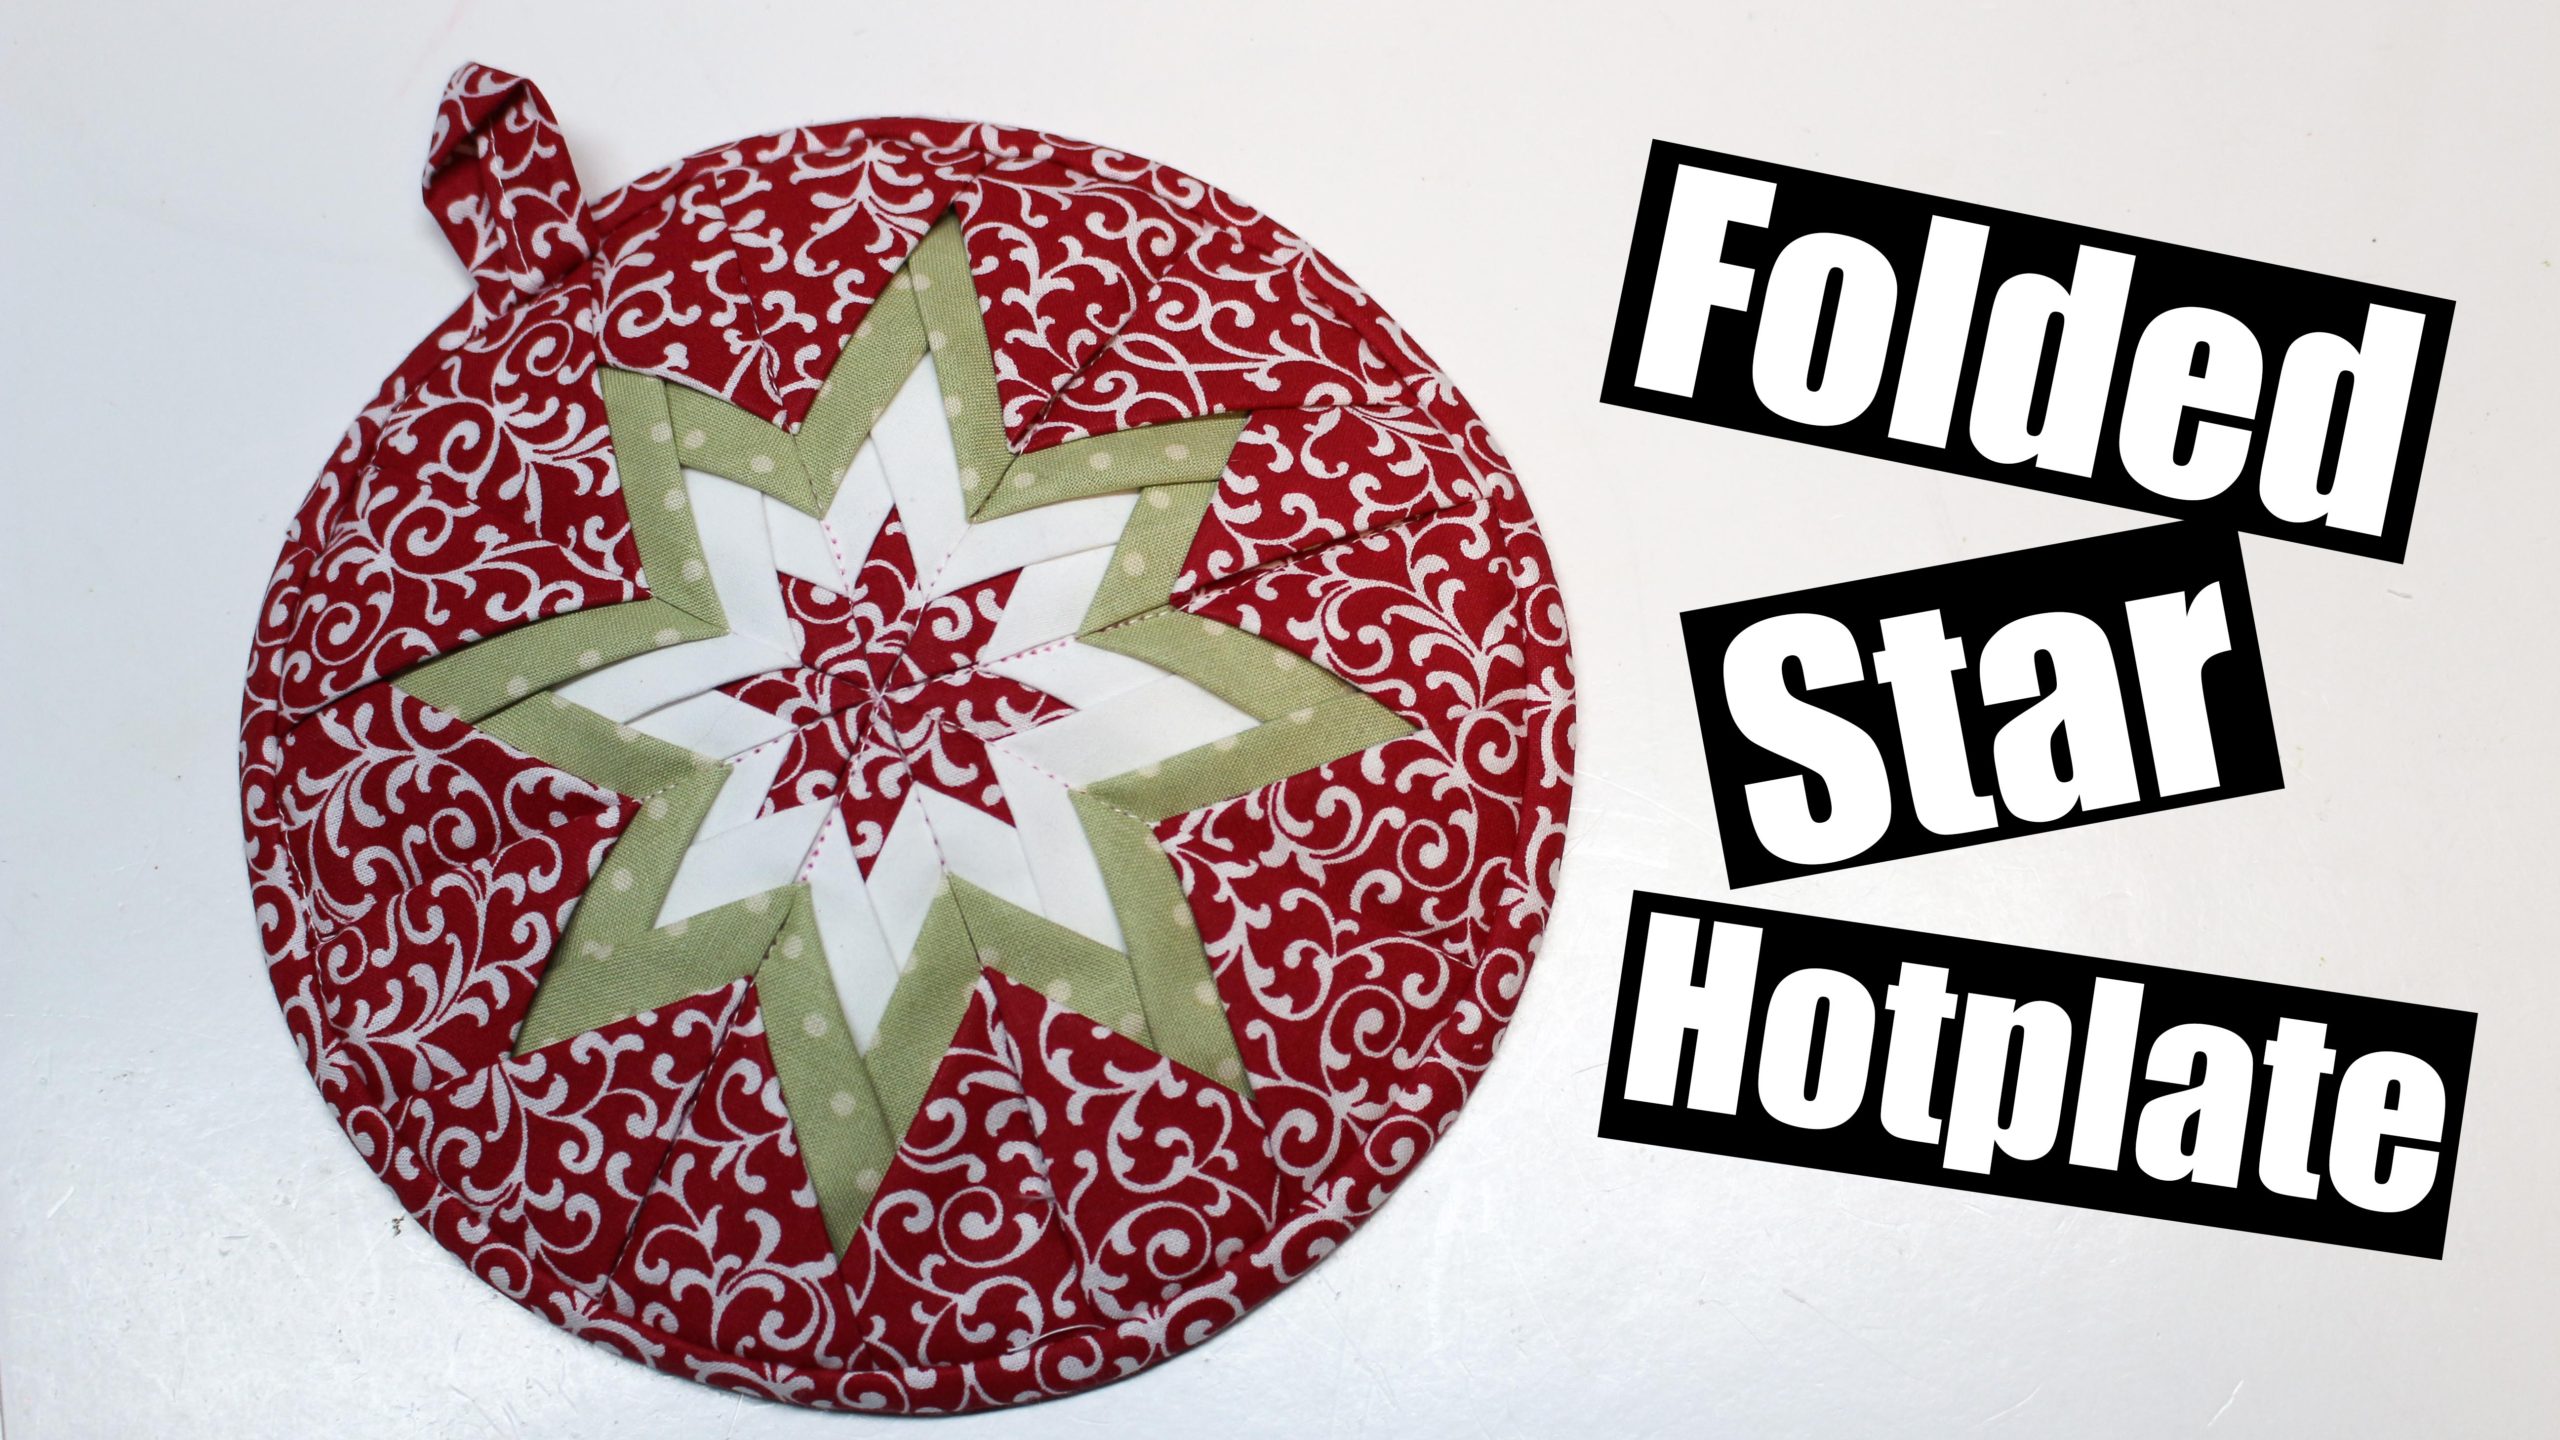 Folded star hot plate